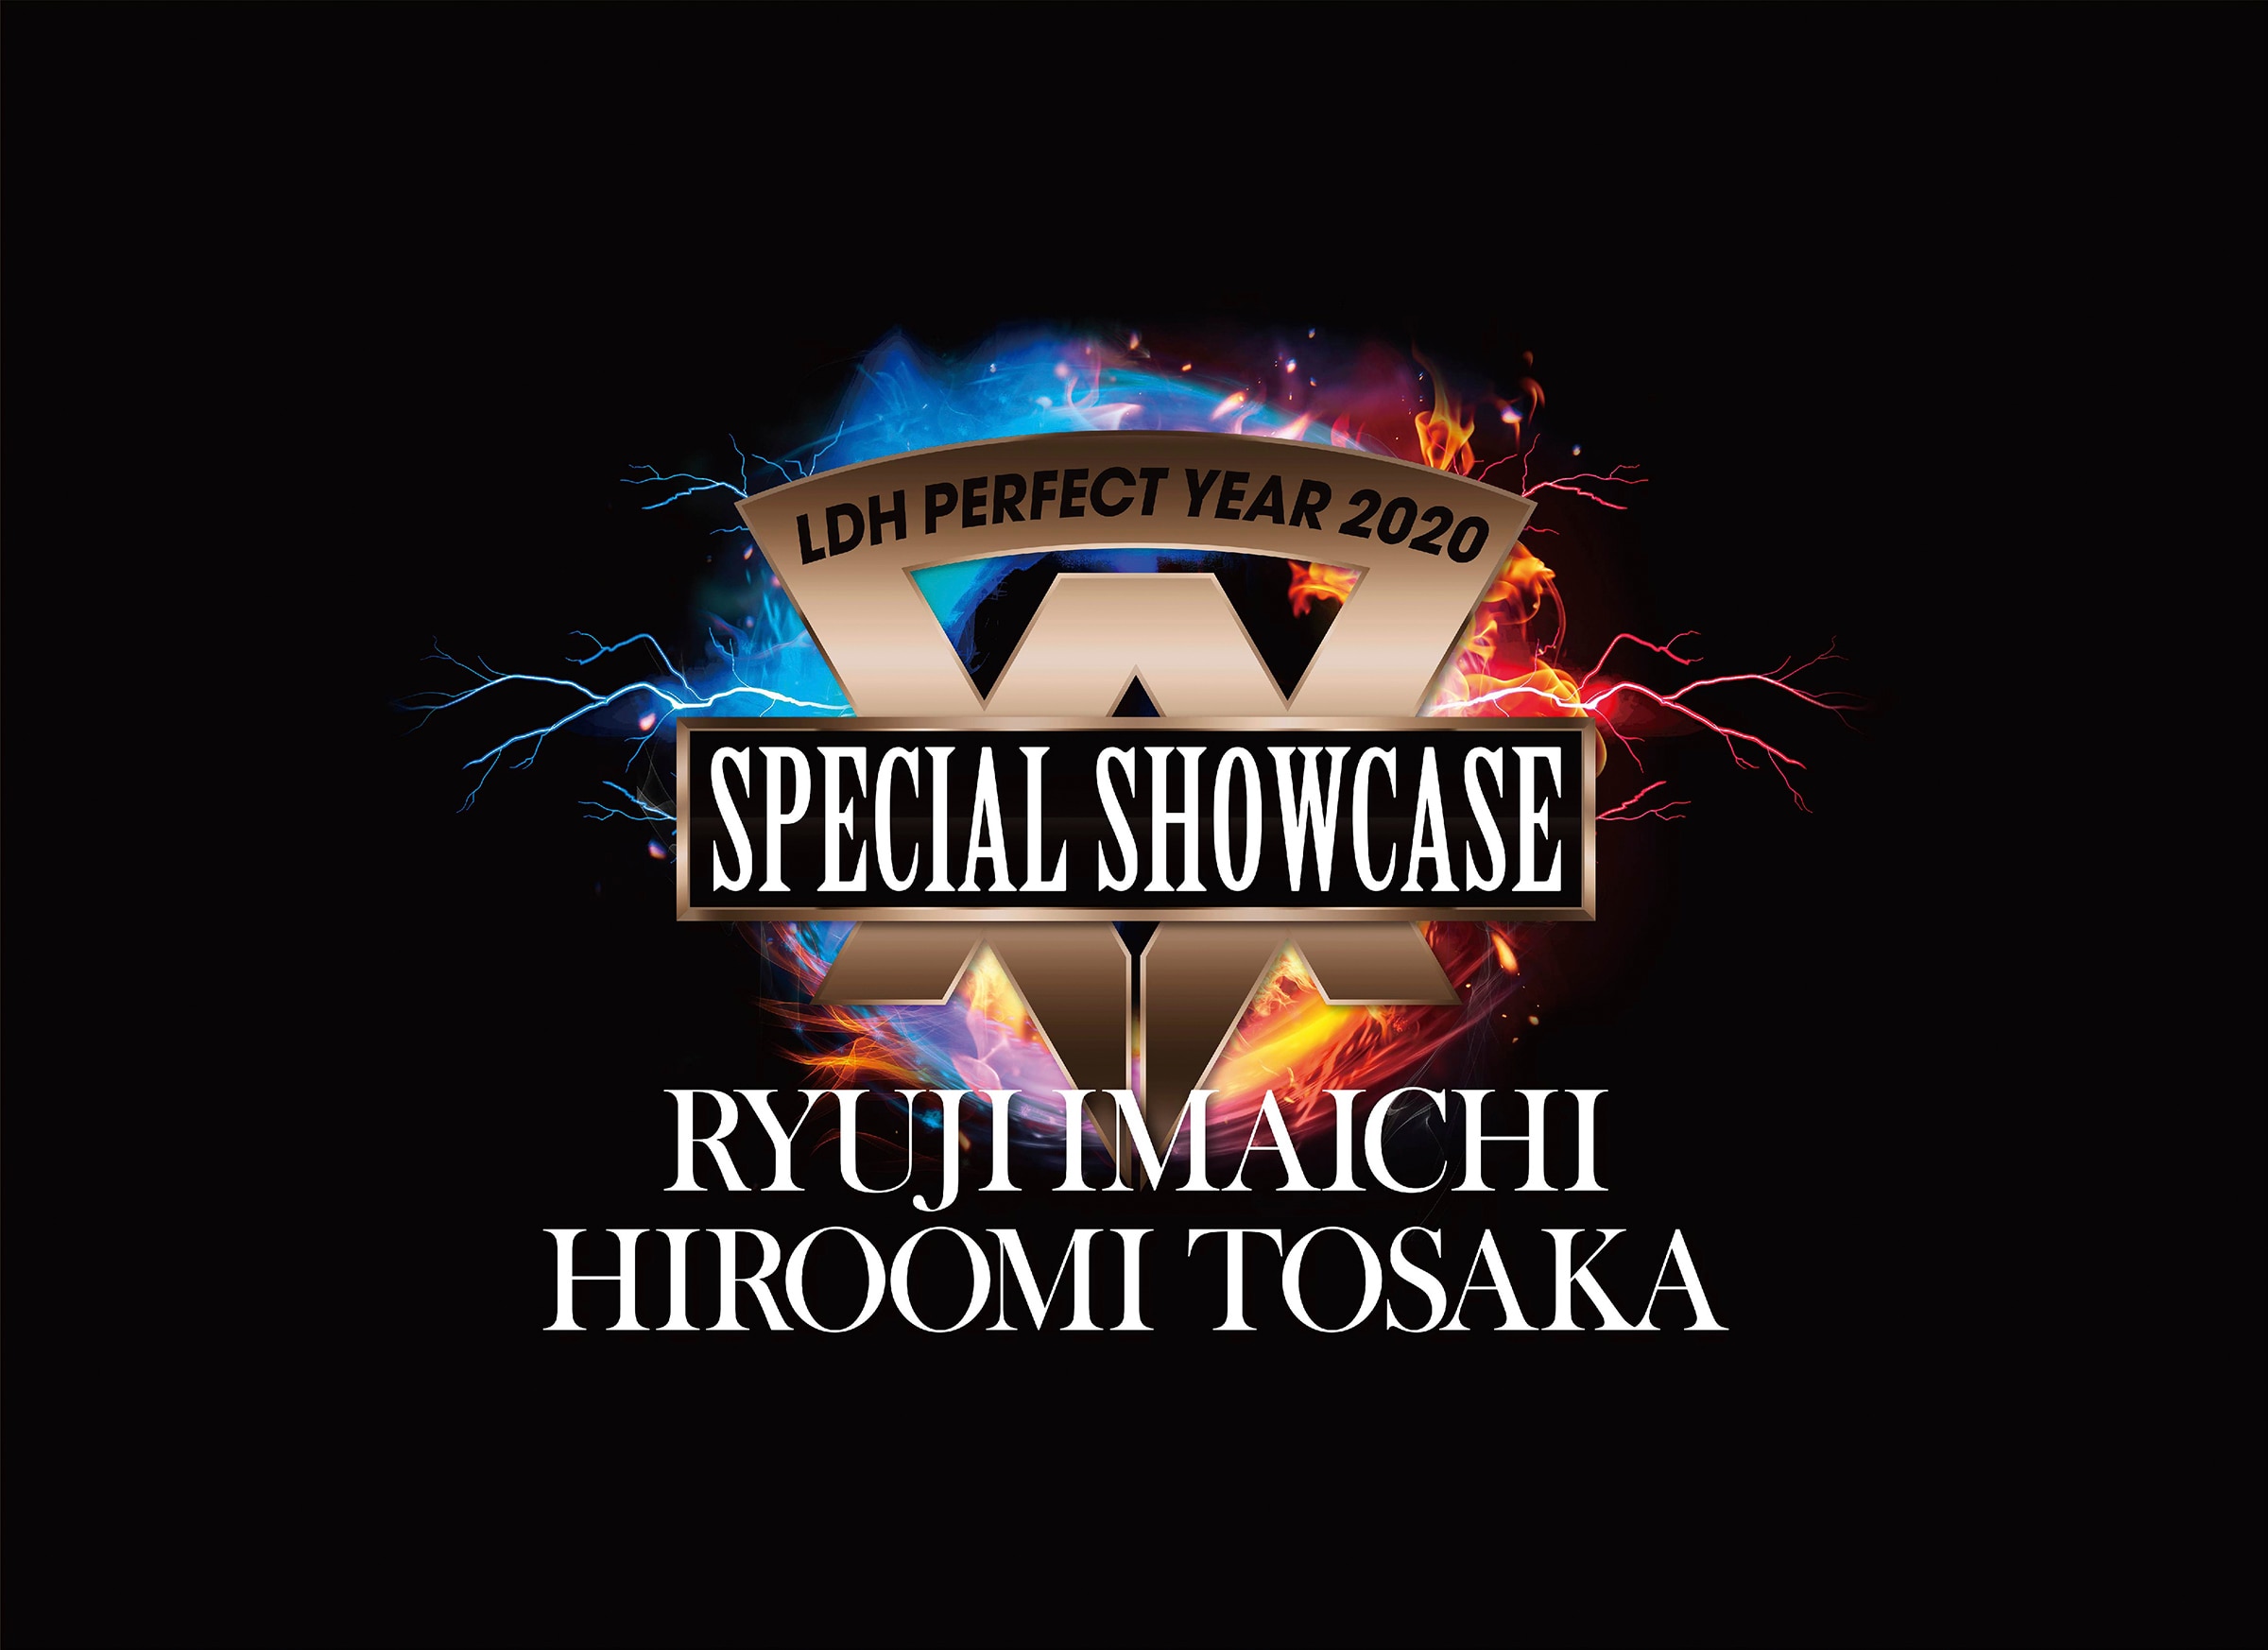 LDH PERFECT YEAR 2020 SPECIAL SHOWCASE RYUJI IMAICHI / HIROOMI TOSAKA【Blu-ray Disc3枚組】